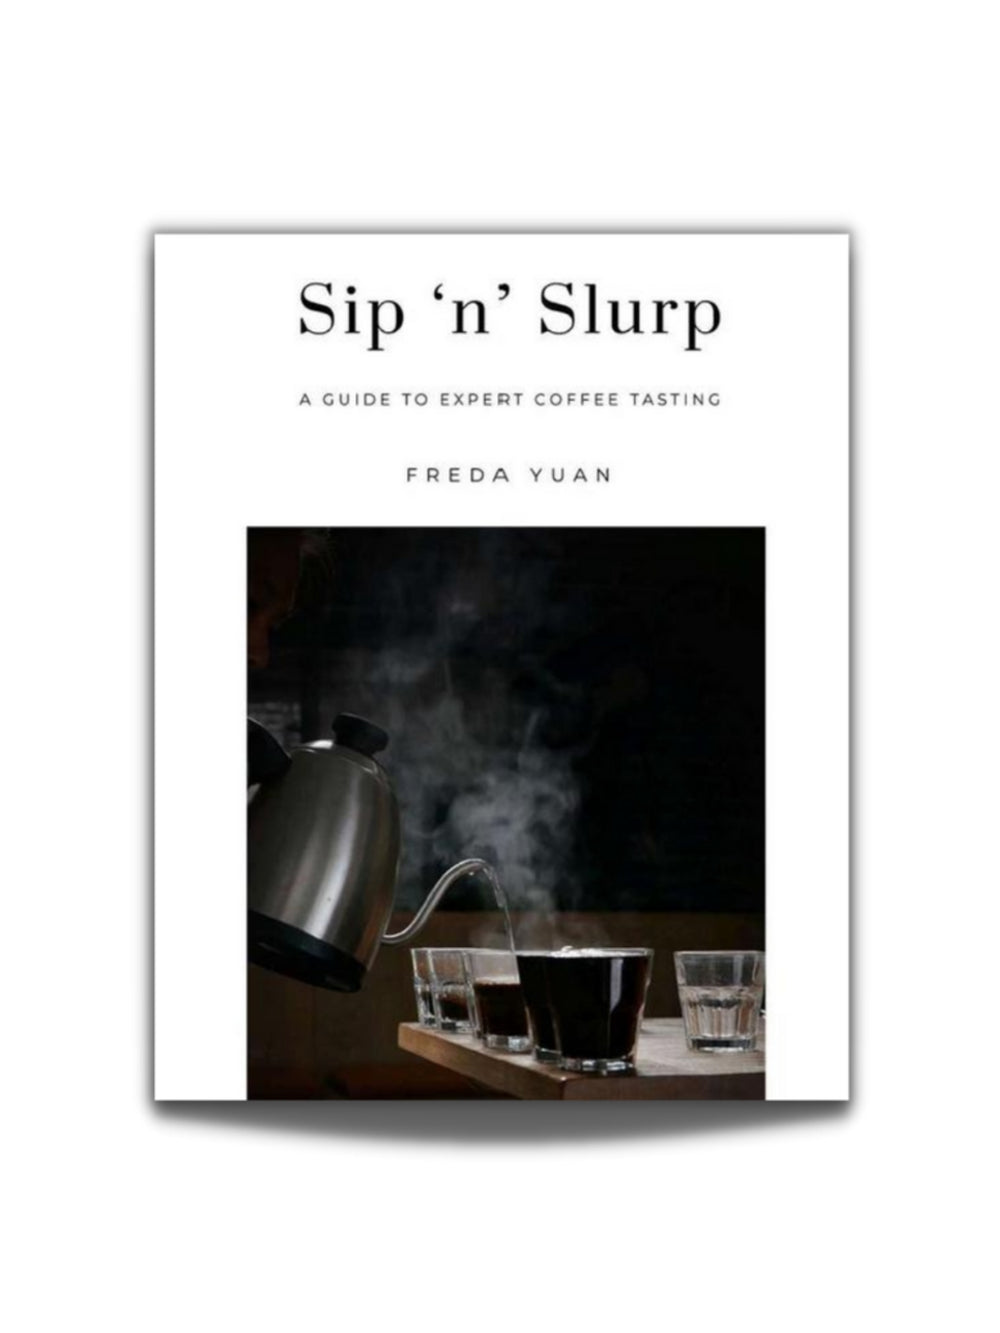 Photo of Sip 'n' Slurp - A Guide To Expert Coffee Tasting ( Default Title ) [ Freda Yuan ] [ Books ]